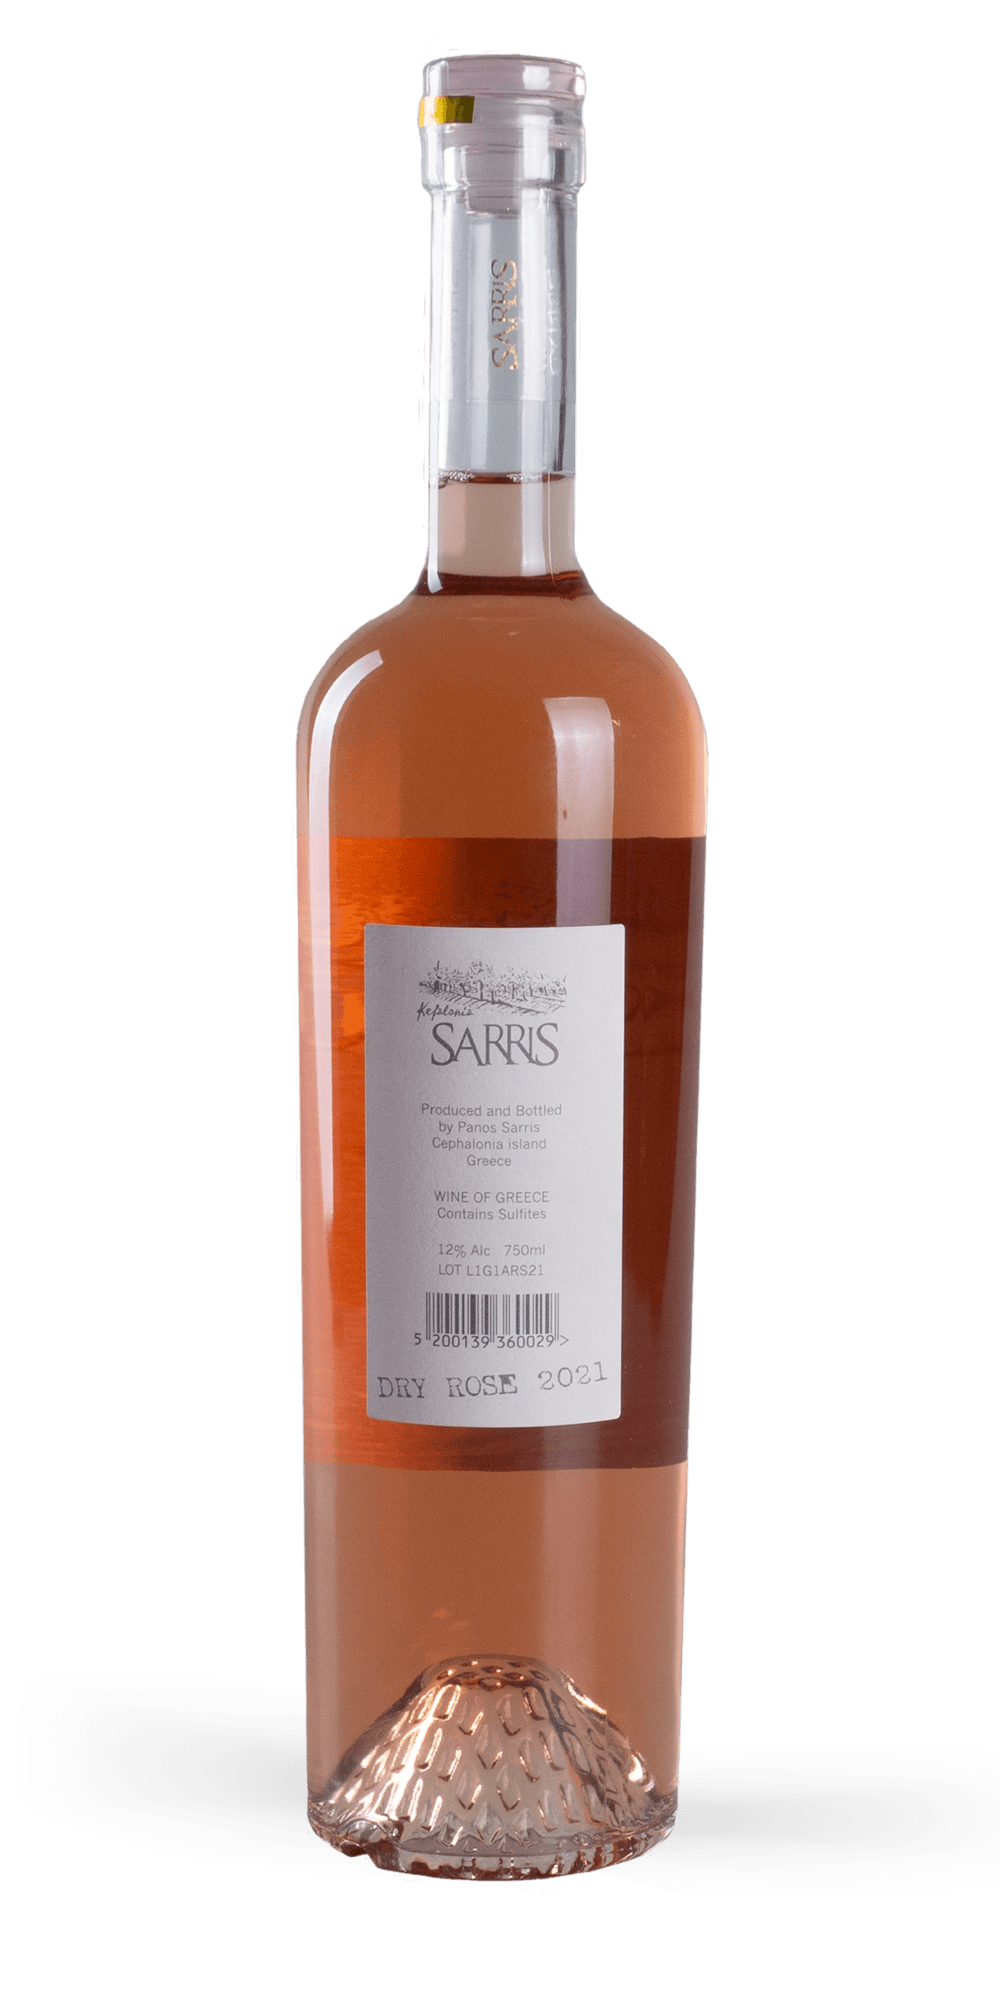 Rose 2022 - Sarris Winery